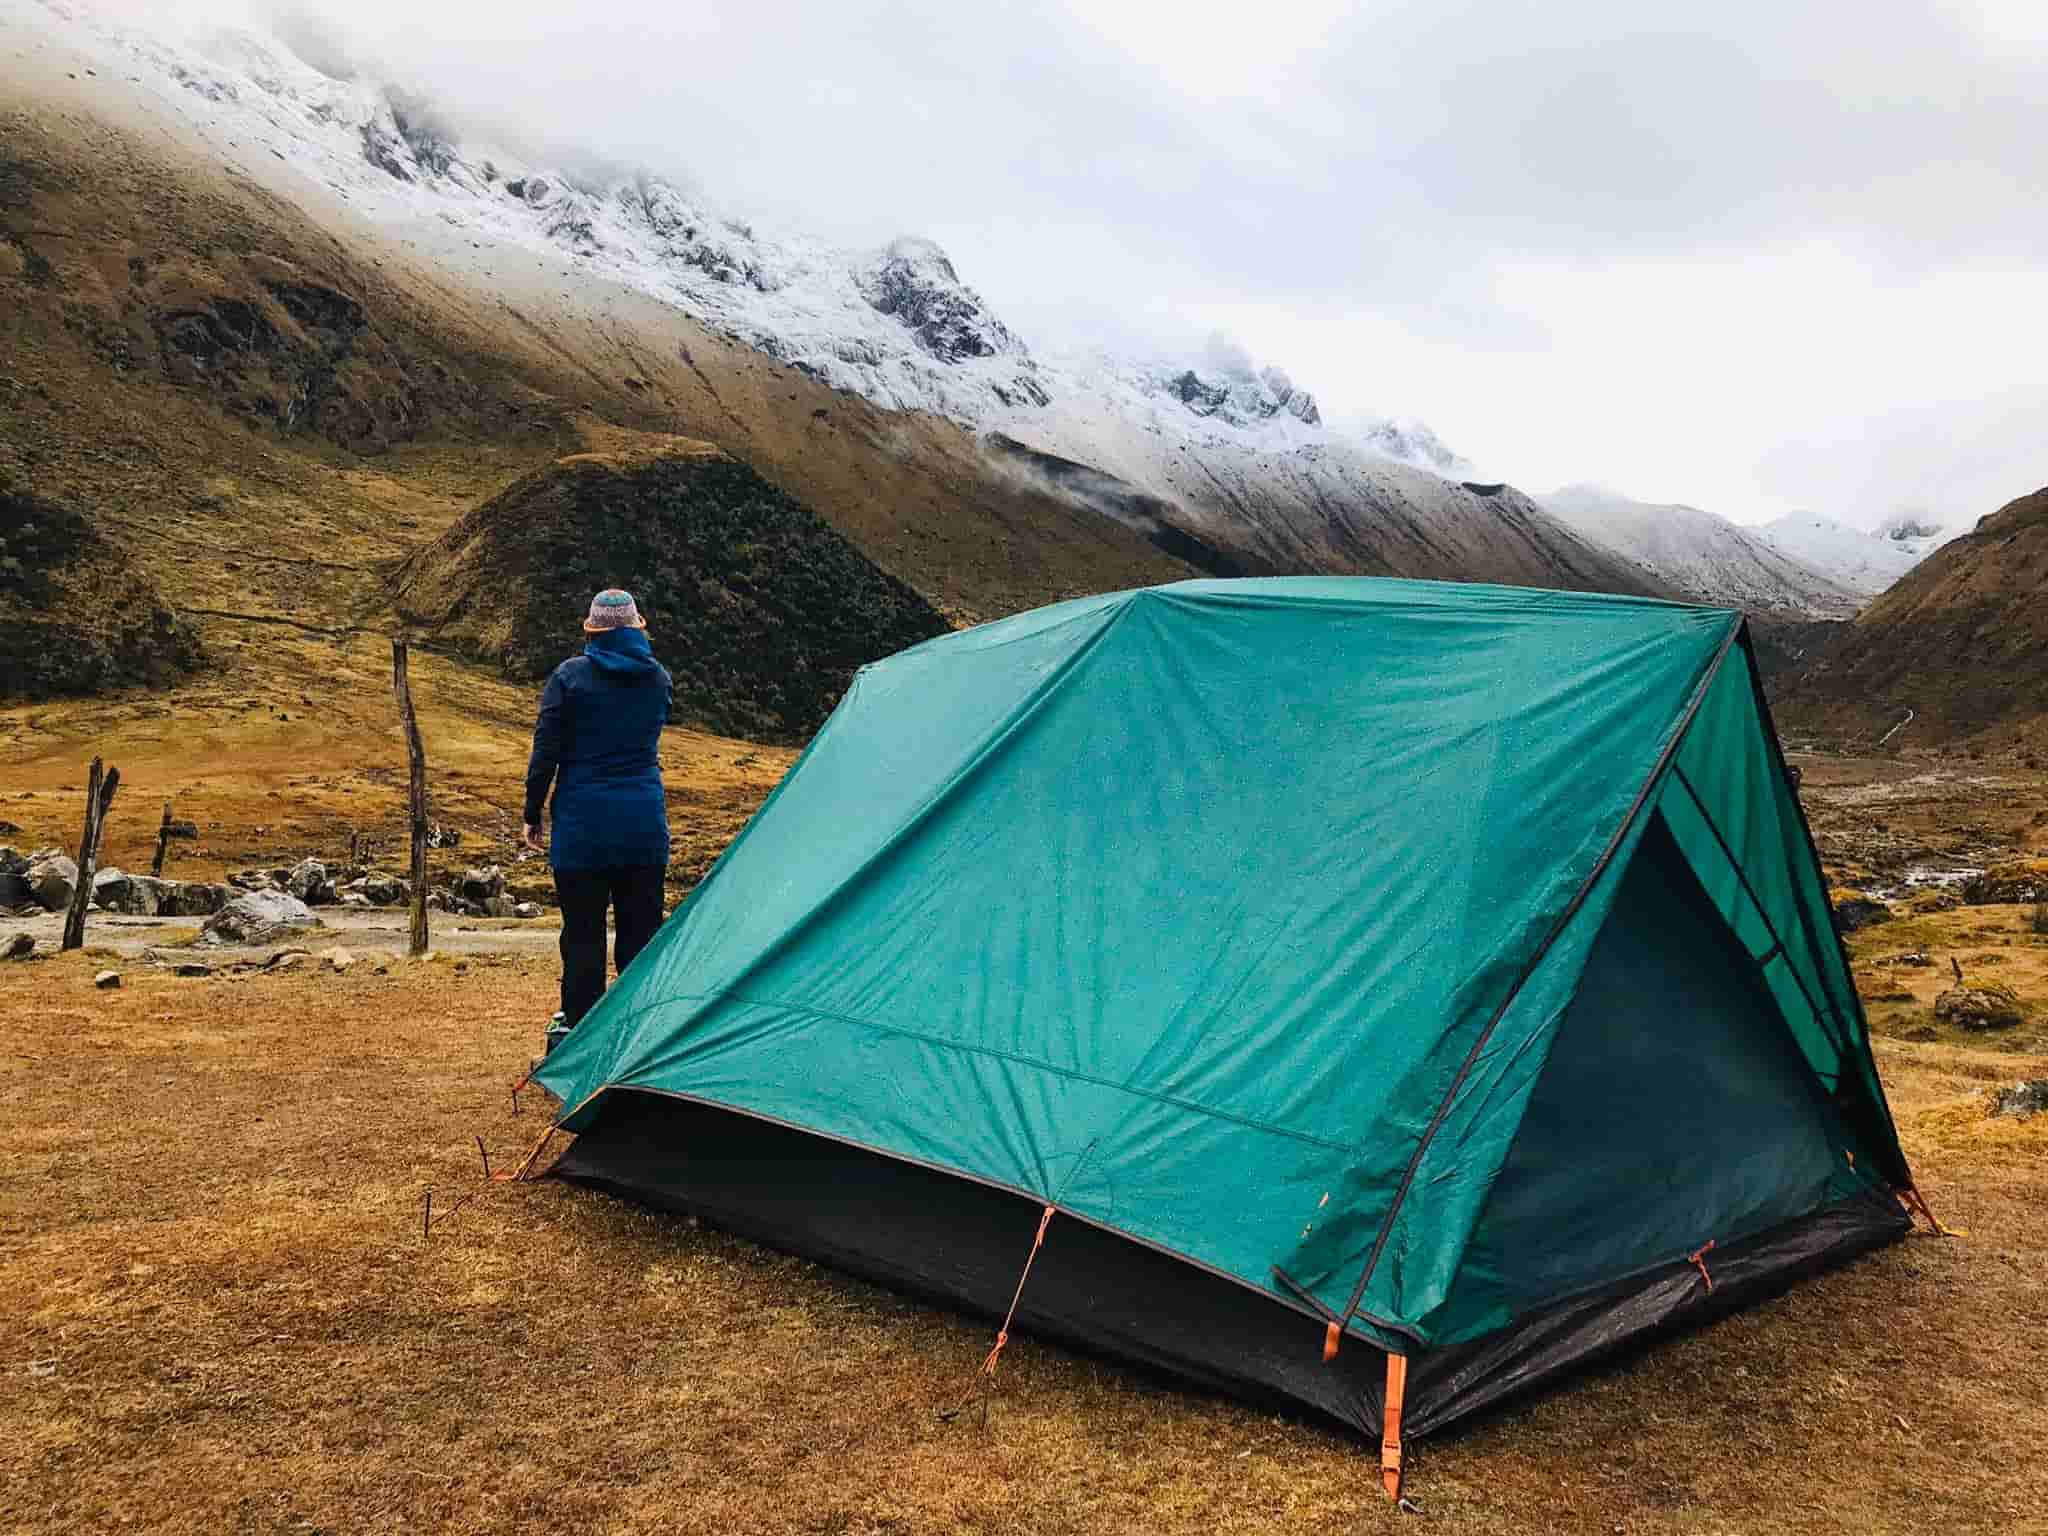 Campsite views during the 4-day Salkantay Trek to Machu Picchu